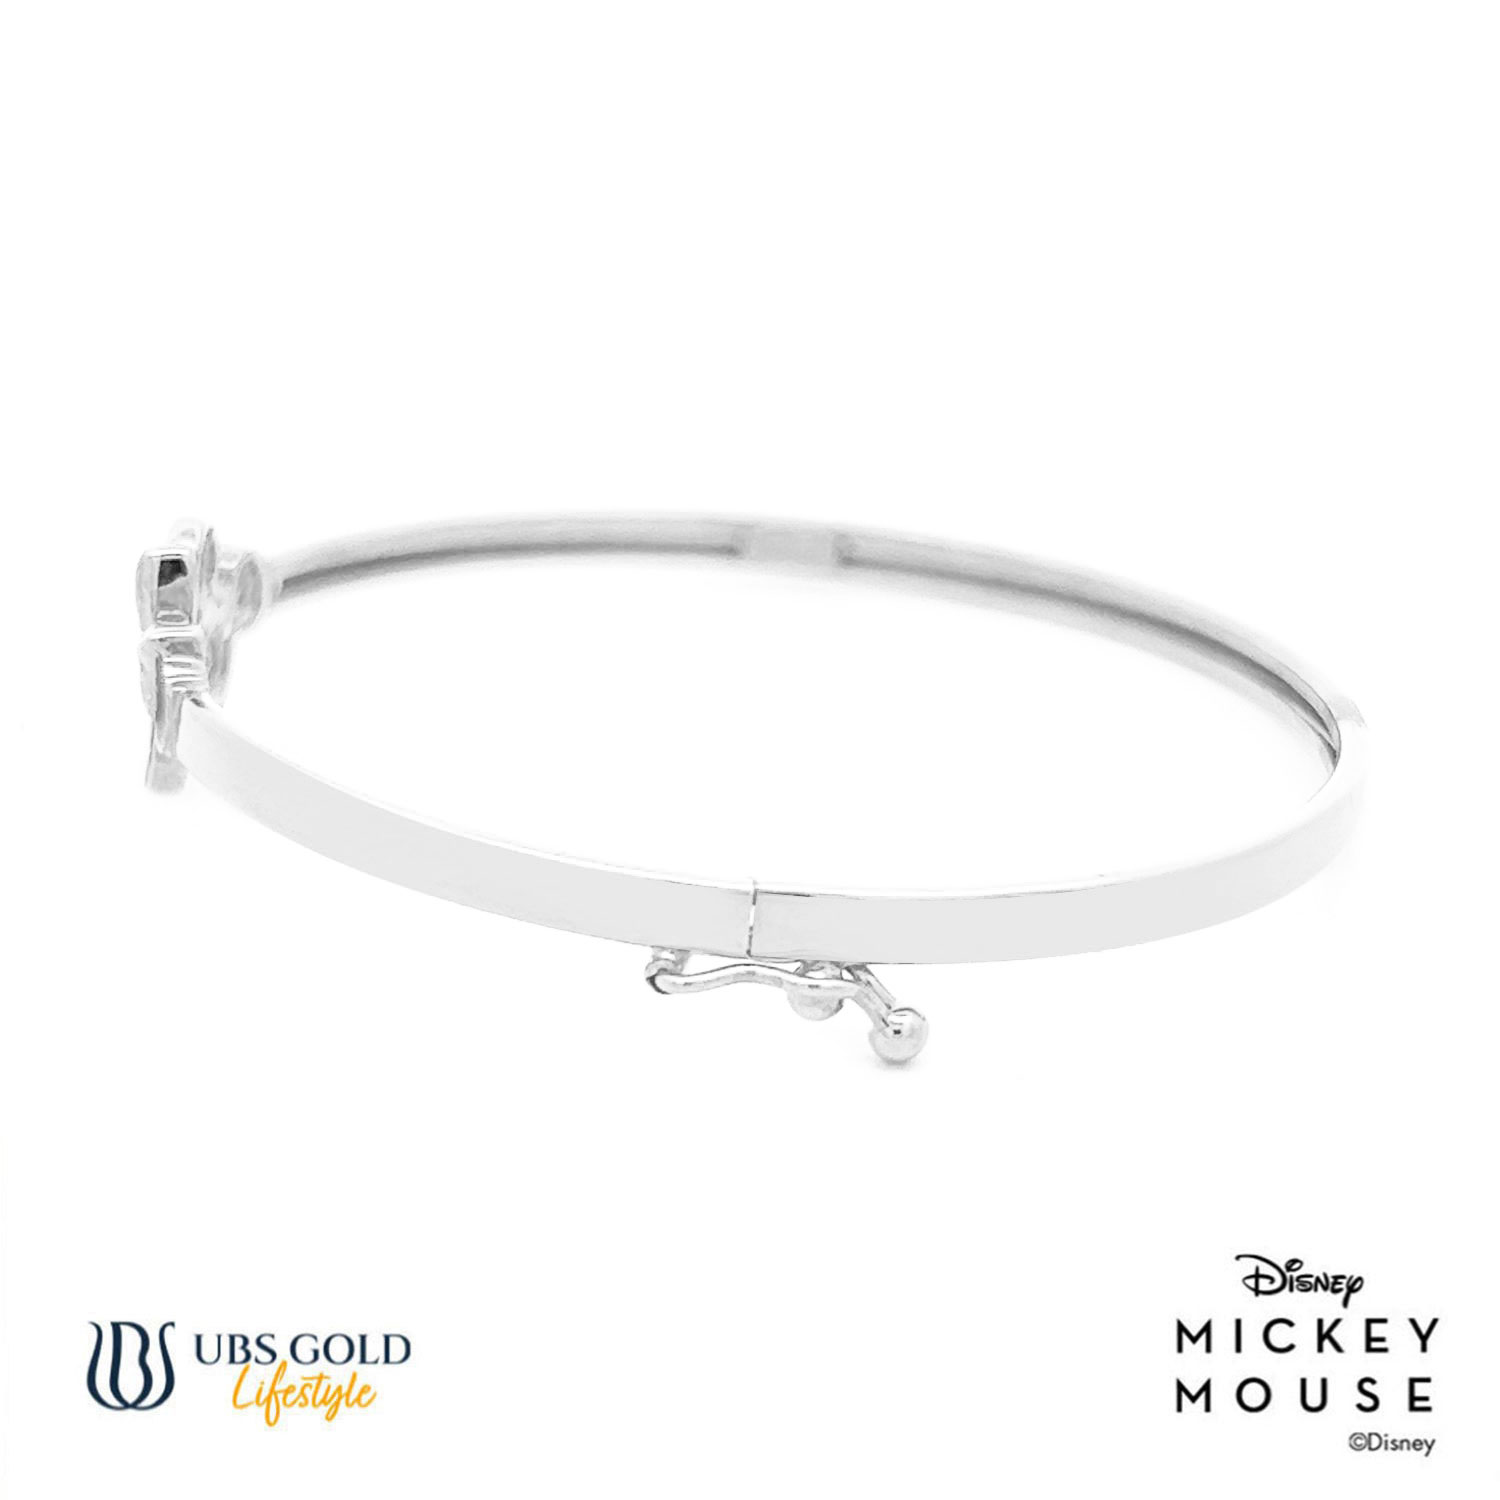 UBS Gold Gelang Emas Bayi Disney Mickey Minnie Mouse - Vgy0055 - 17K